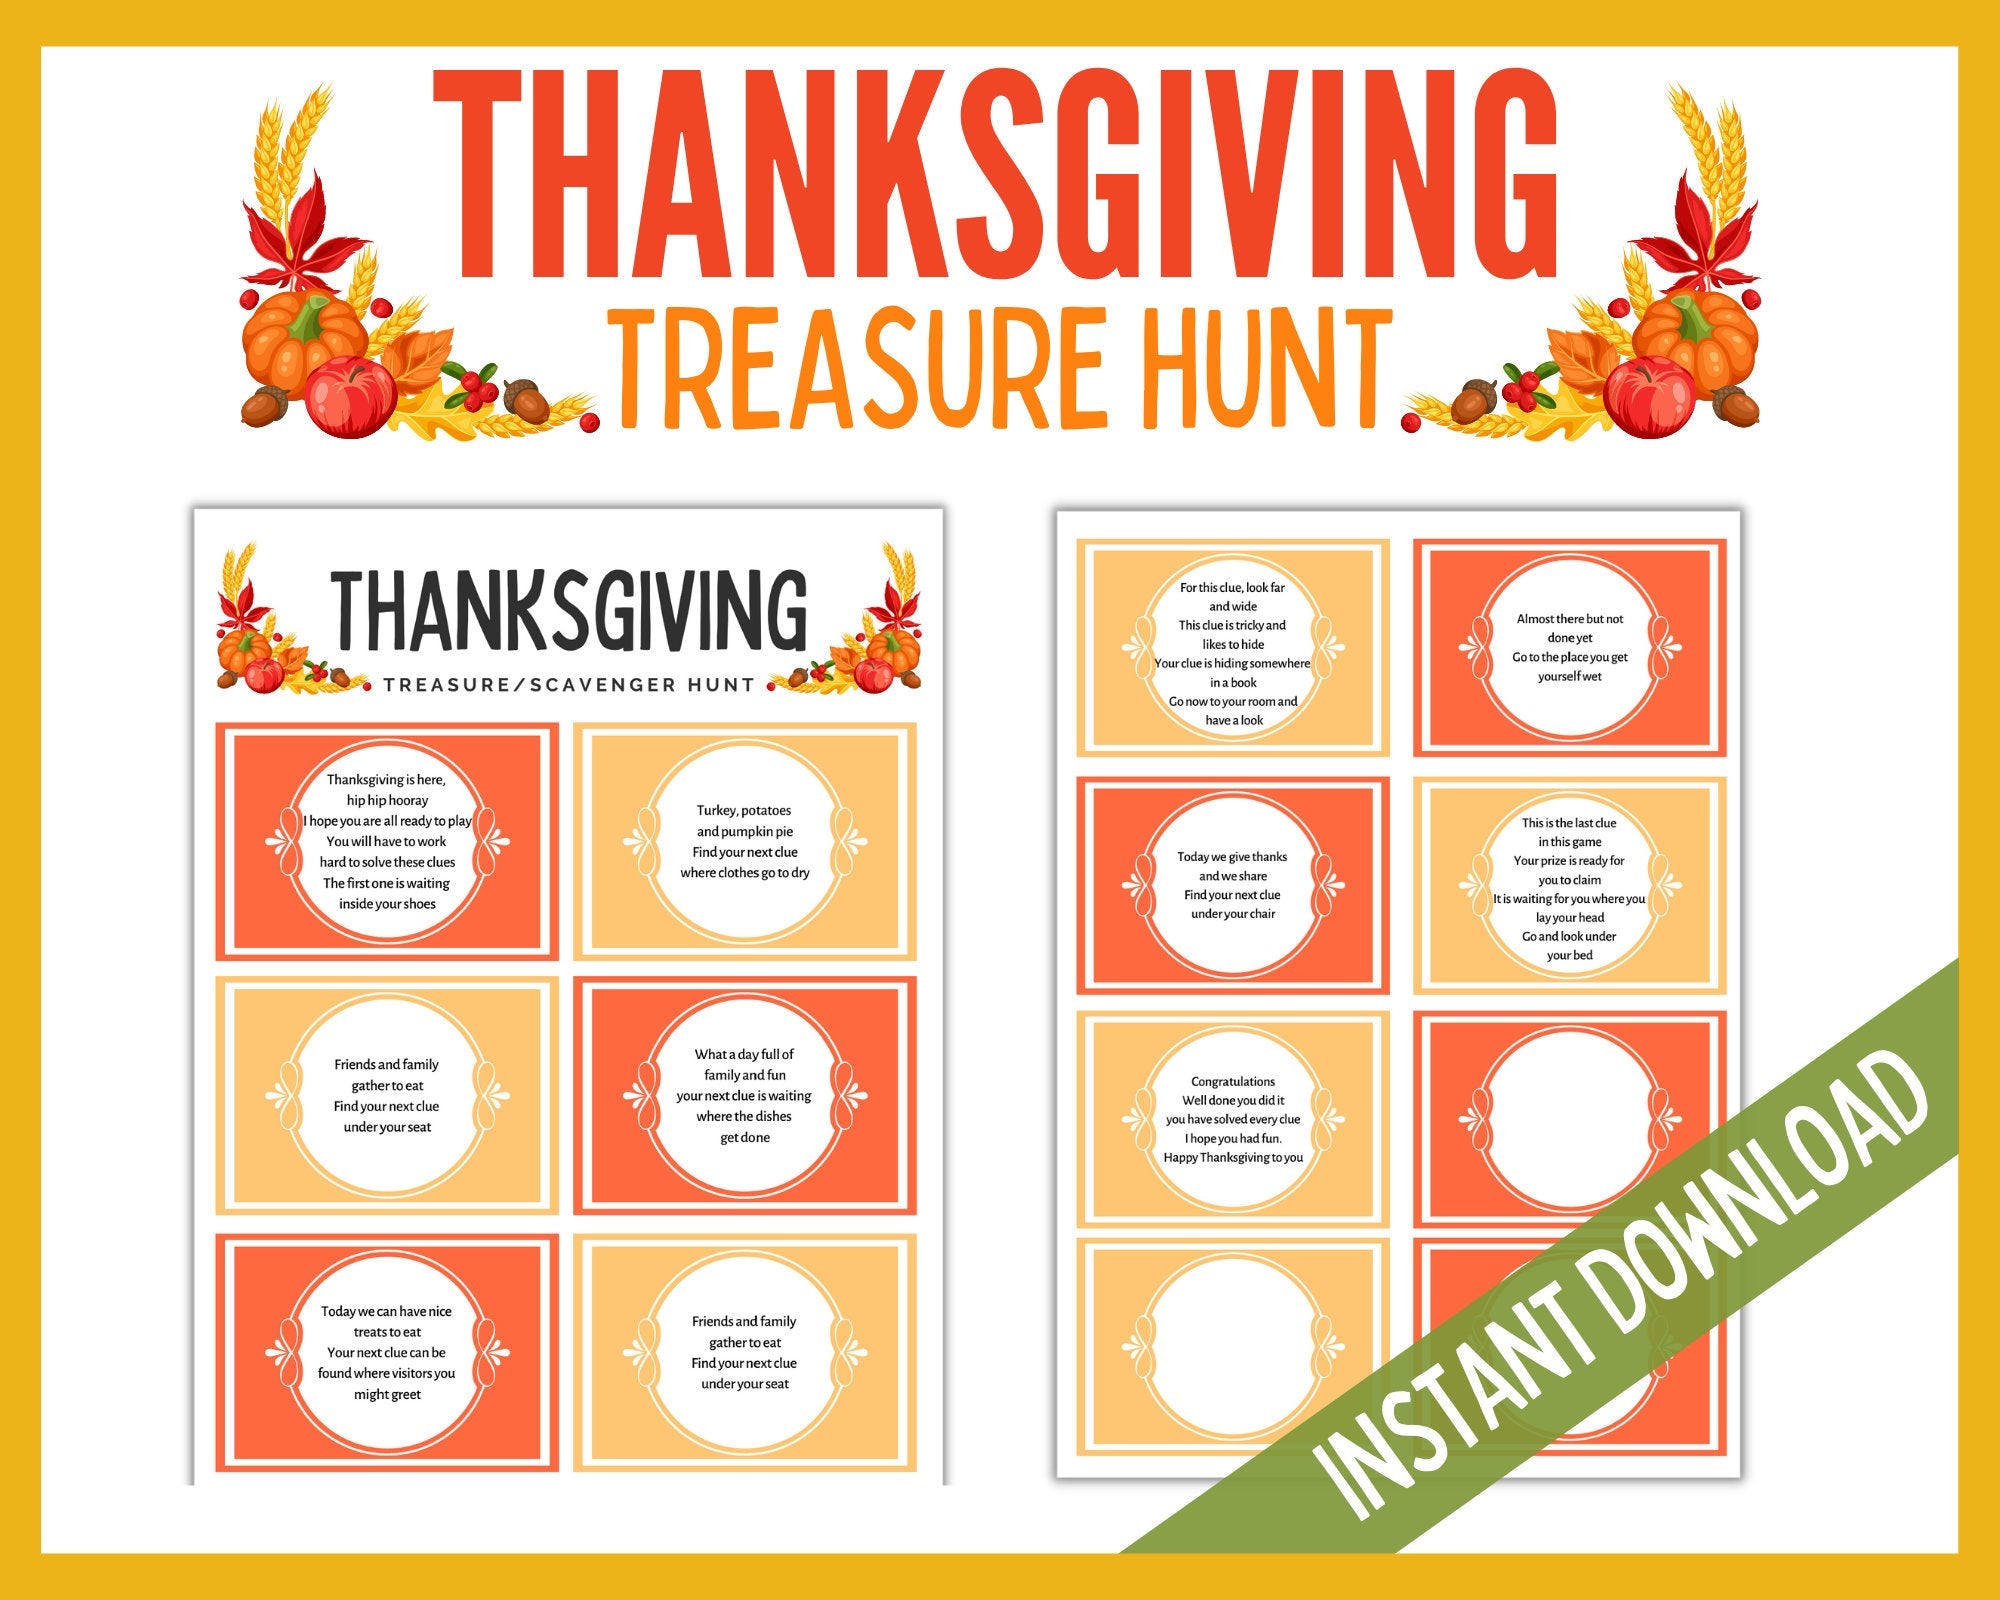 Thanksgiving Treasure Hunt Clues- Riddles | LittleHaloJ